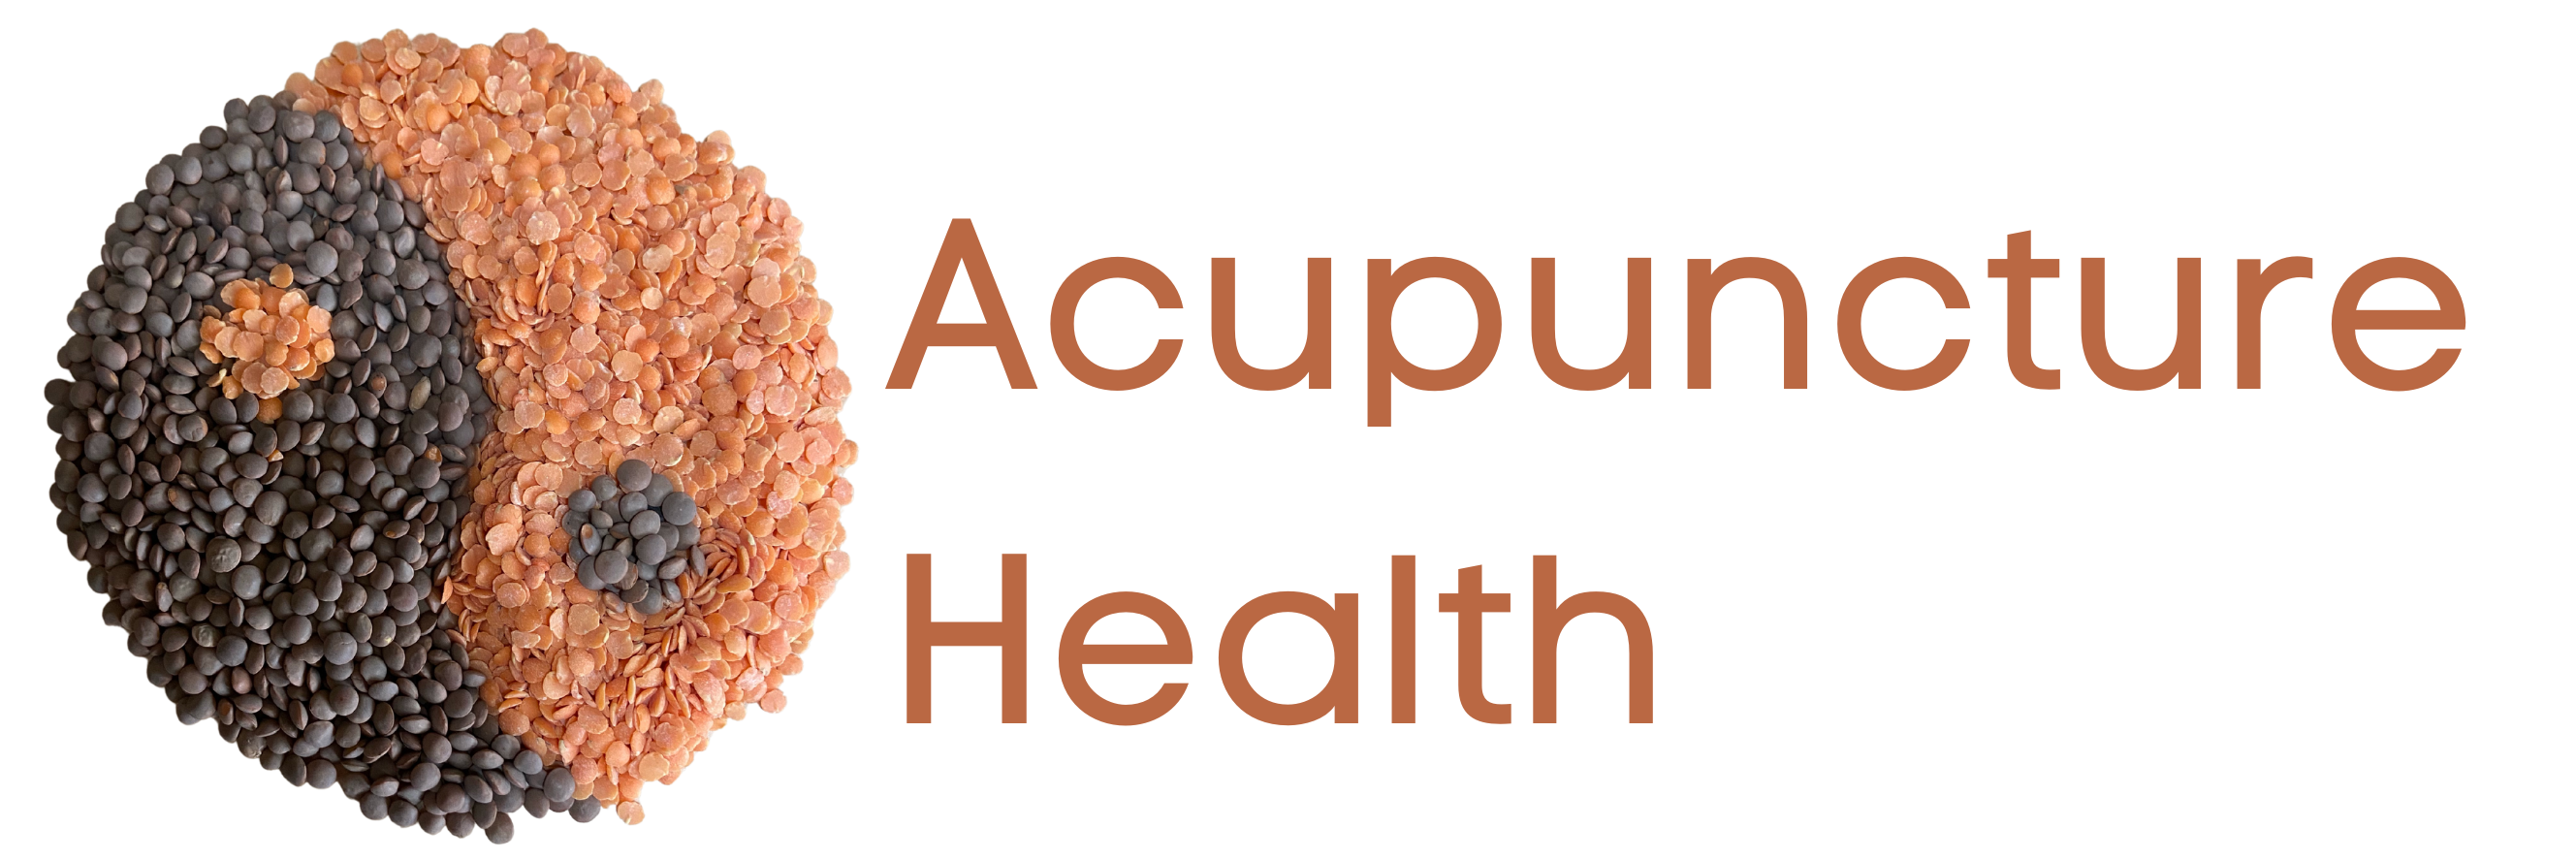 Acupunture Health